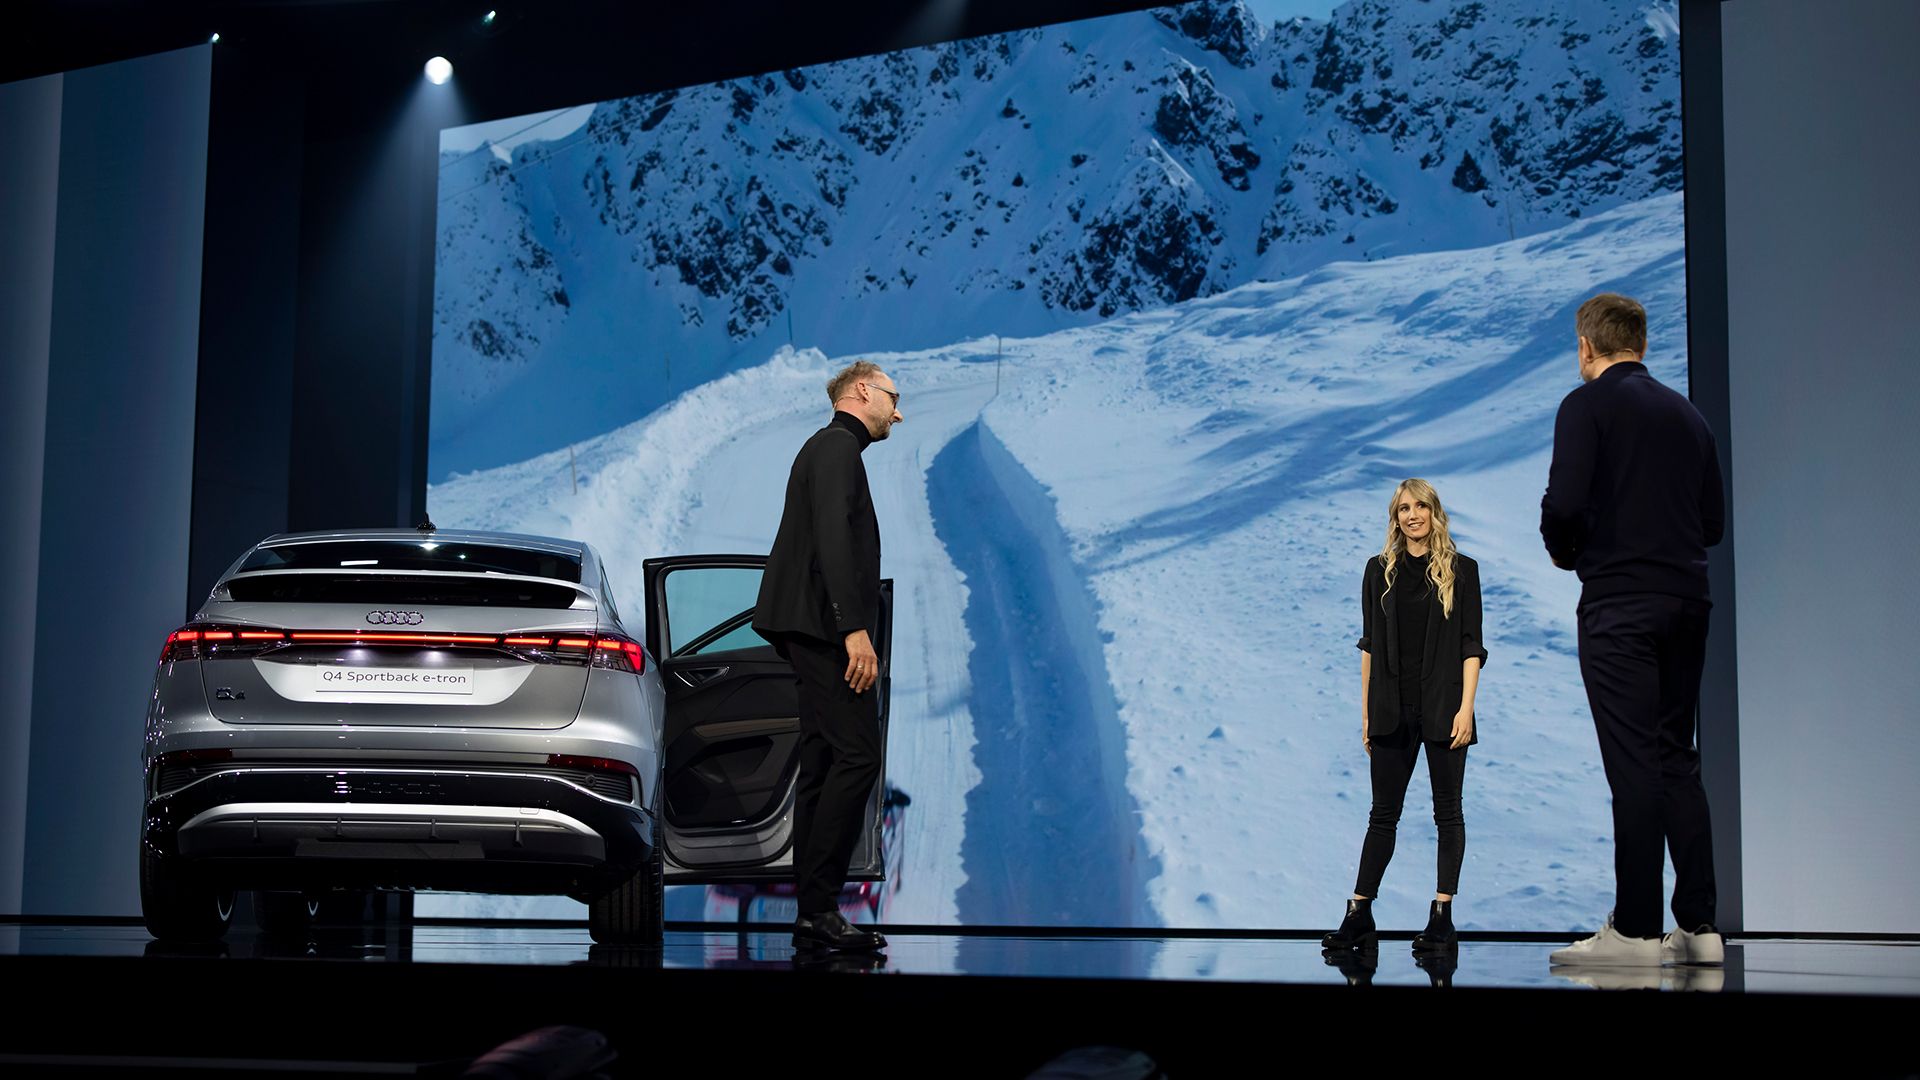 Anna Gasser 与 Marc Licht 和 Steven Gätjen 一同站在舞台上。在背景中，可以在屏幕上看到一片雪景。